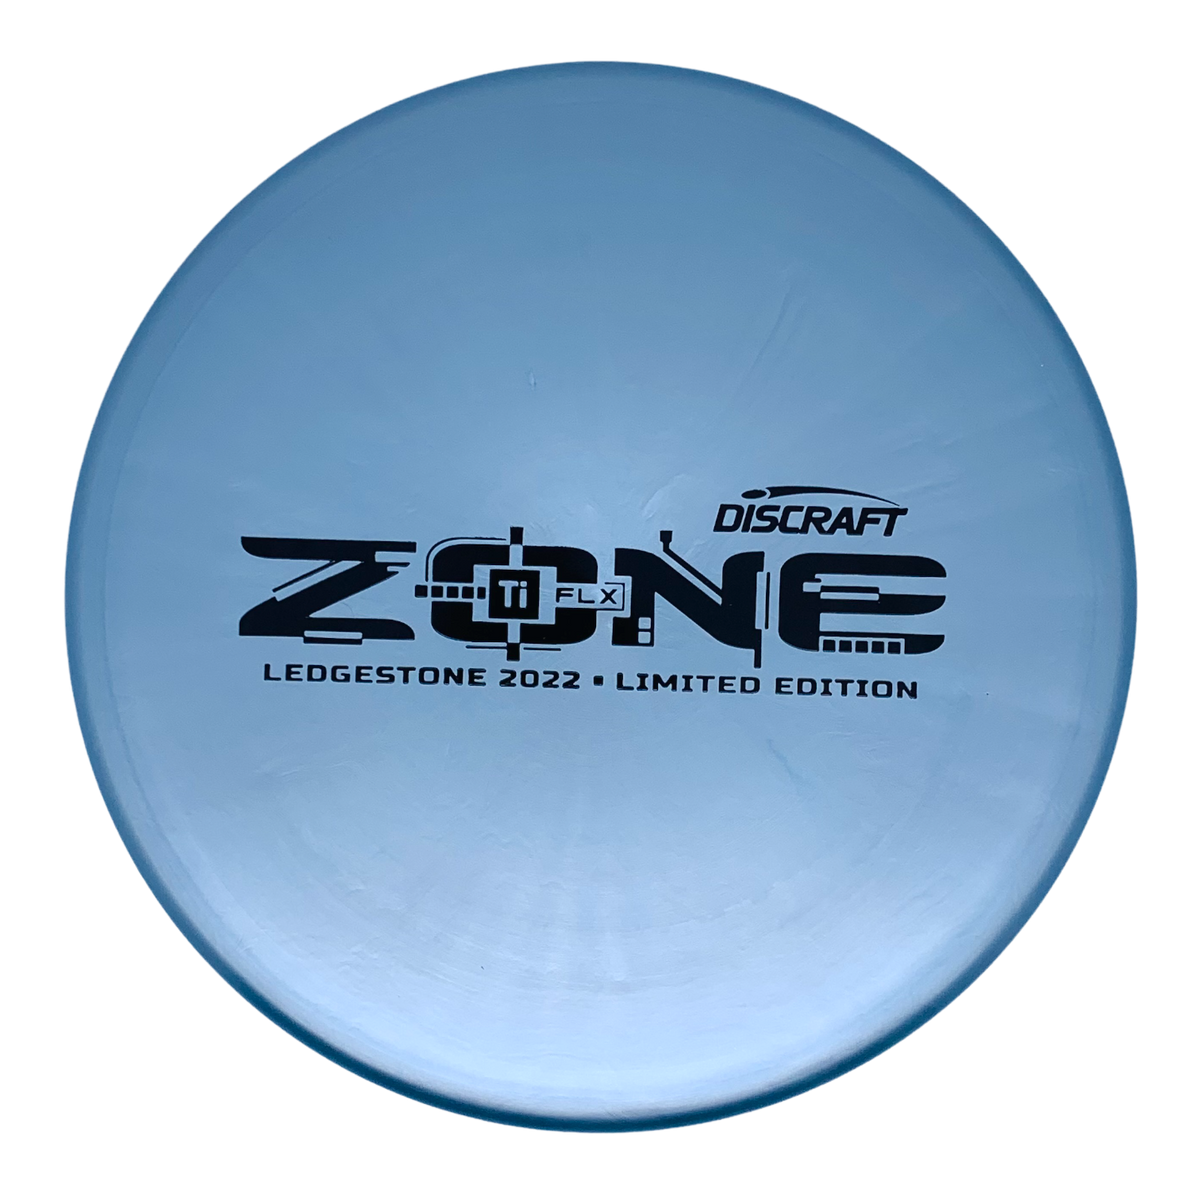 Discraft TI FLX Zone- Ledgestone 3